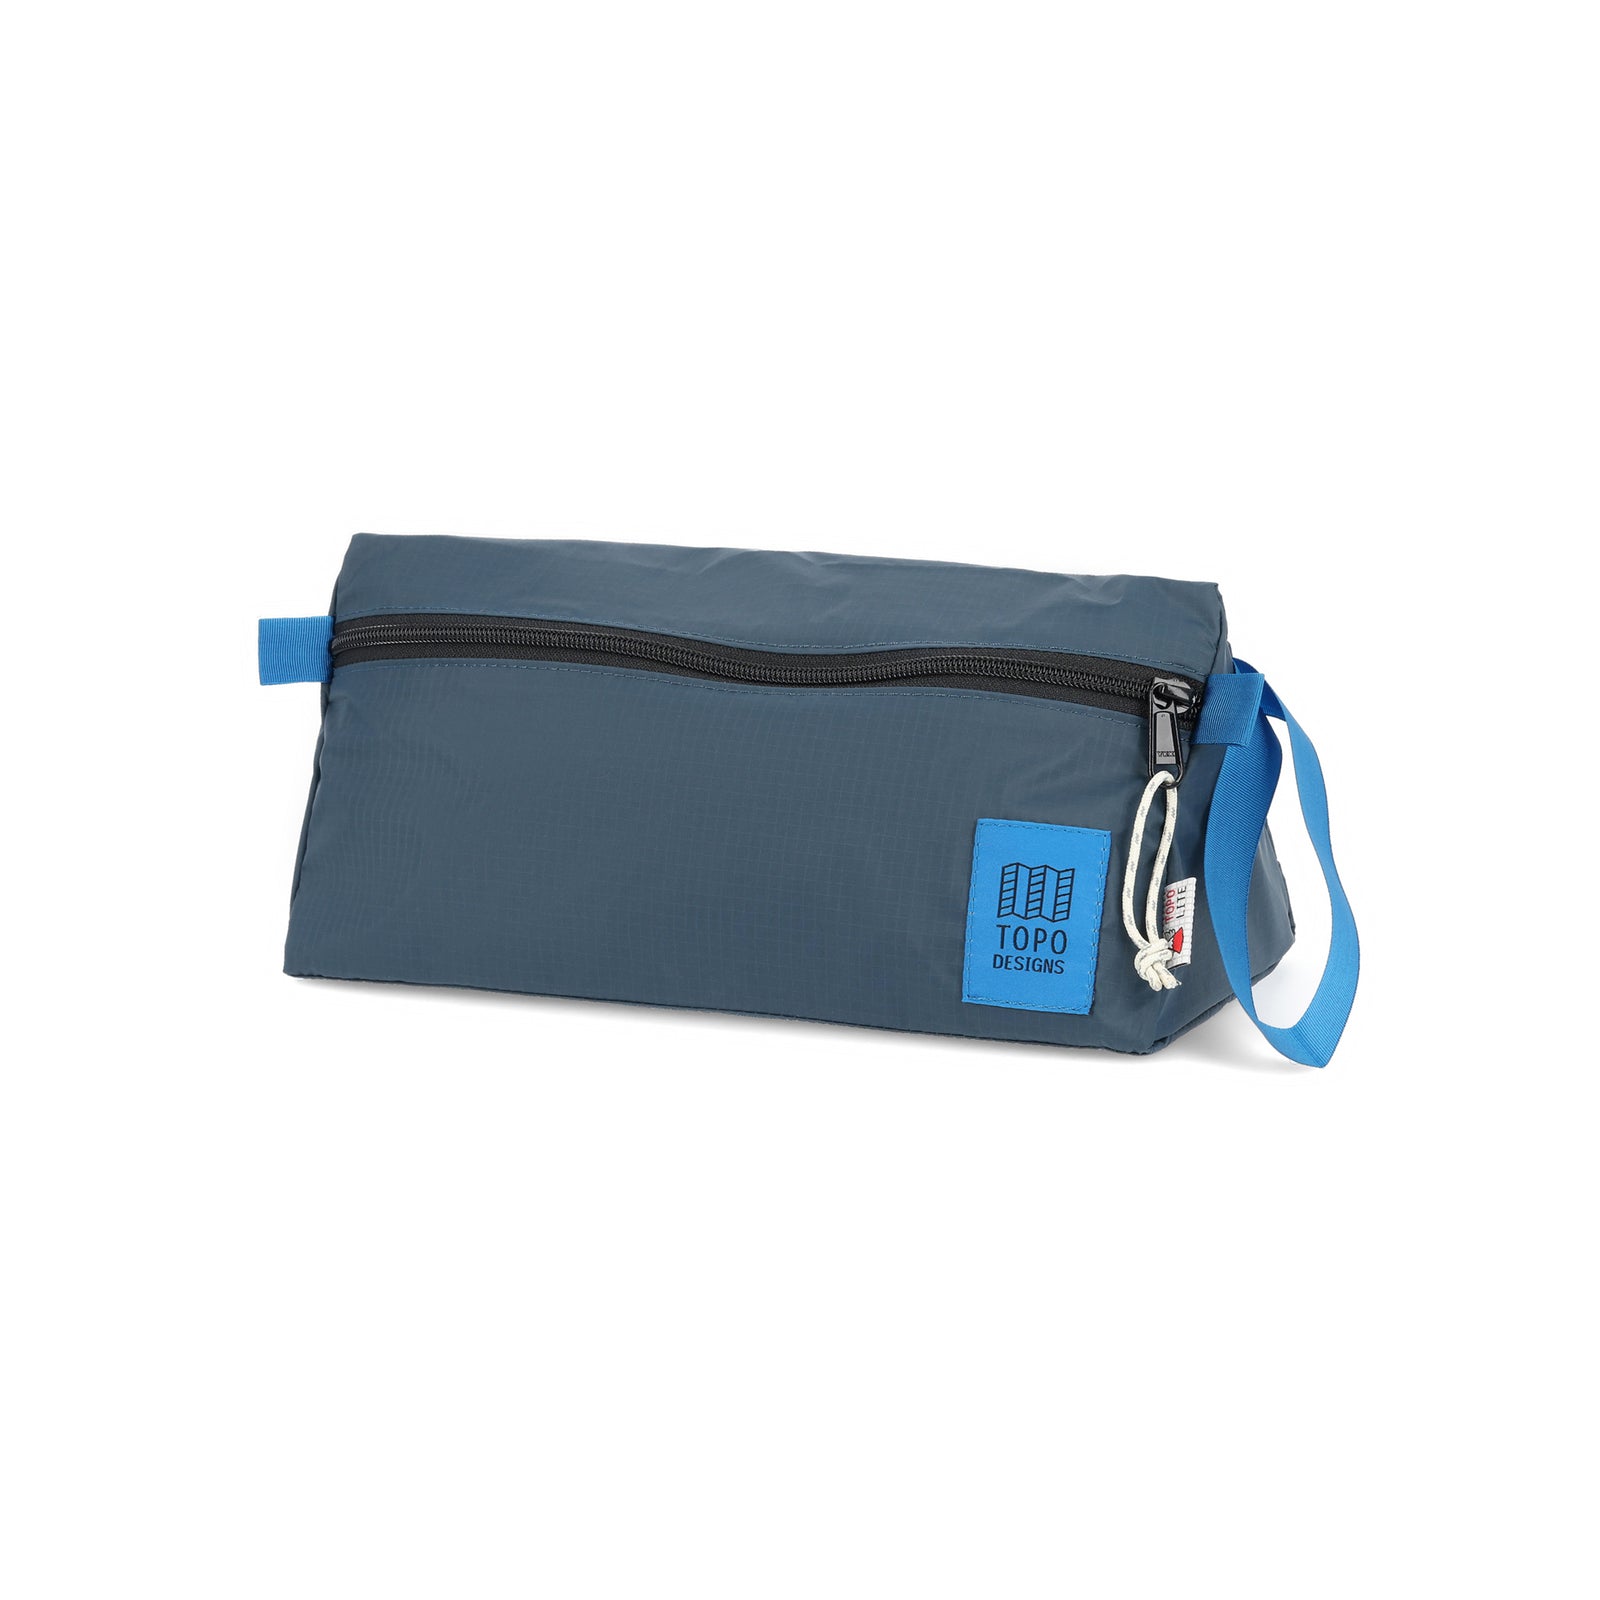 Topo Designs TopoLite Dopp Kit ultralight toiletry bag for travel in "pond blue"